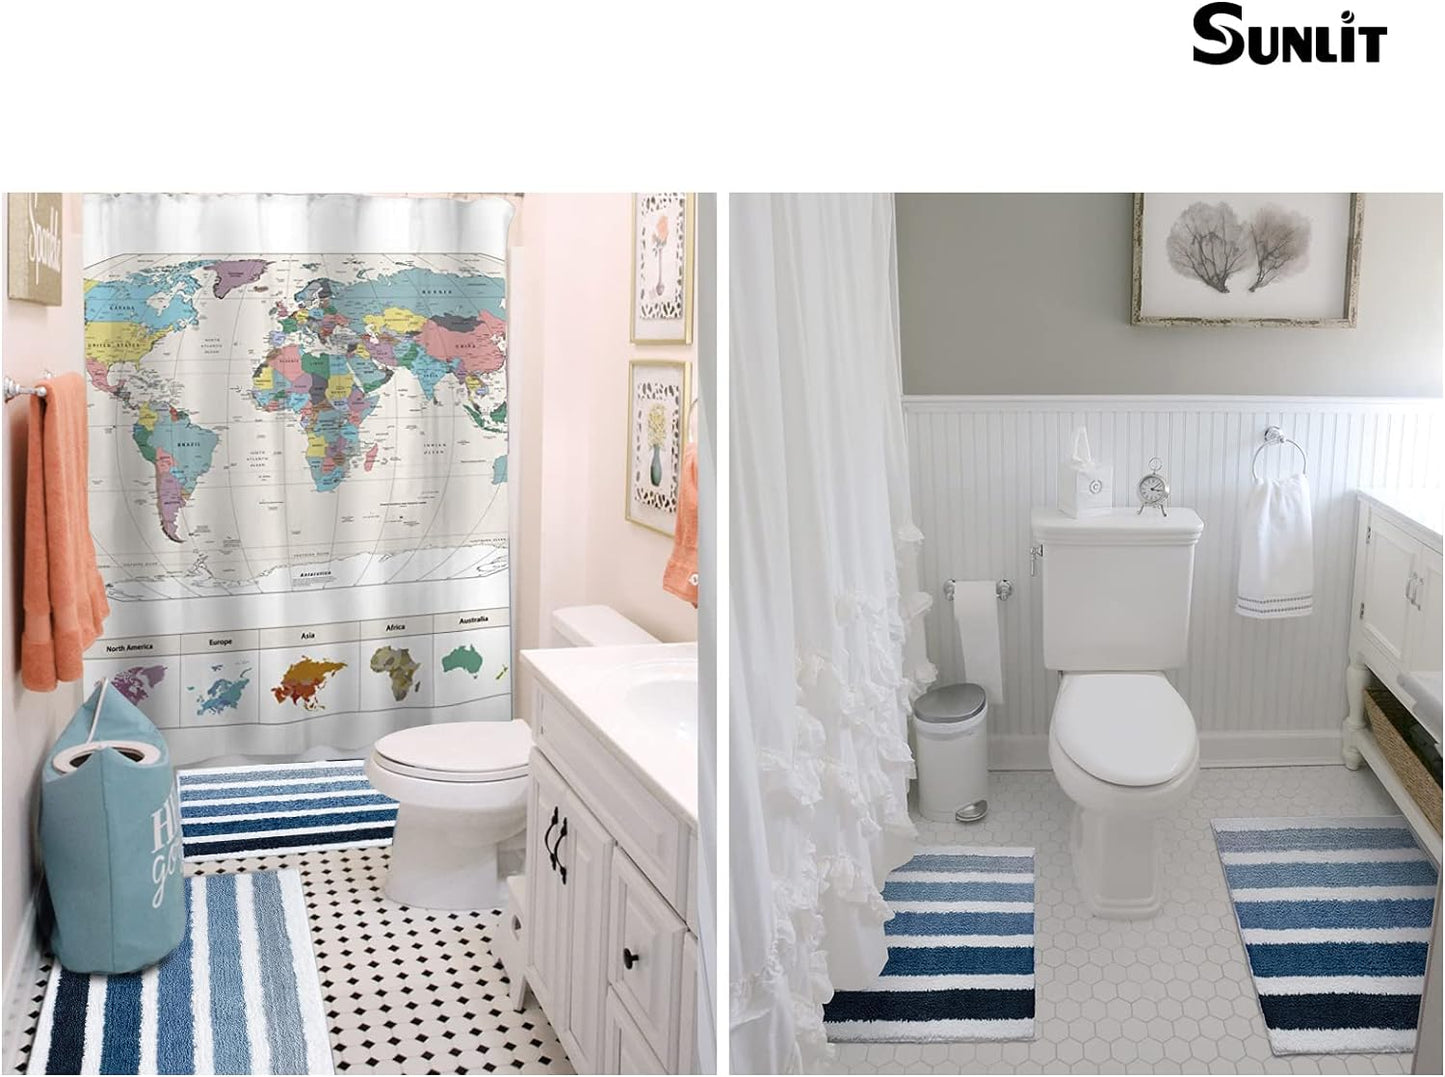 Sunlit 17"x24" Ombre Blue Bathroom Rug Non-Slip Absorbent Soft Bath Mat Set, Floor Mat Dry Fast Machine Washable.